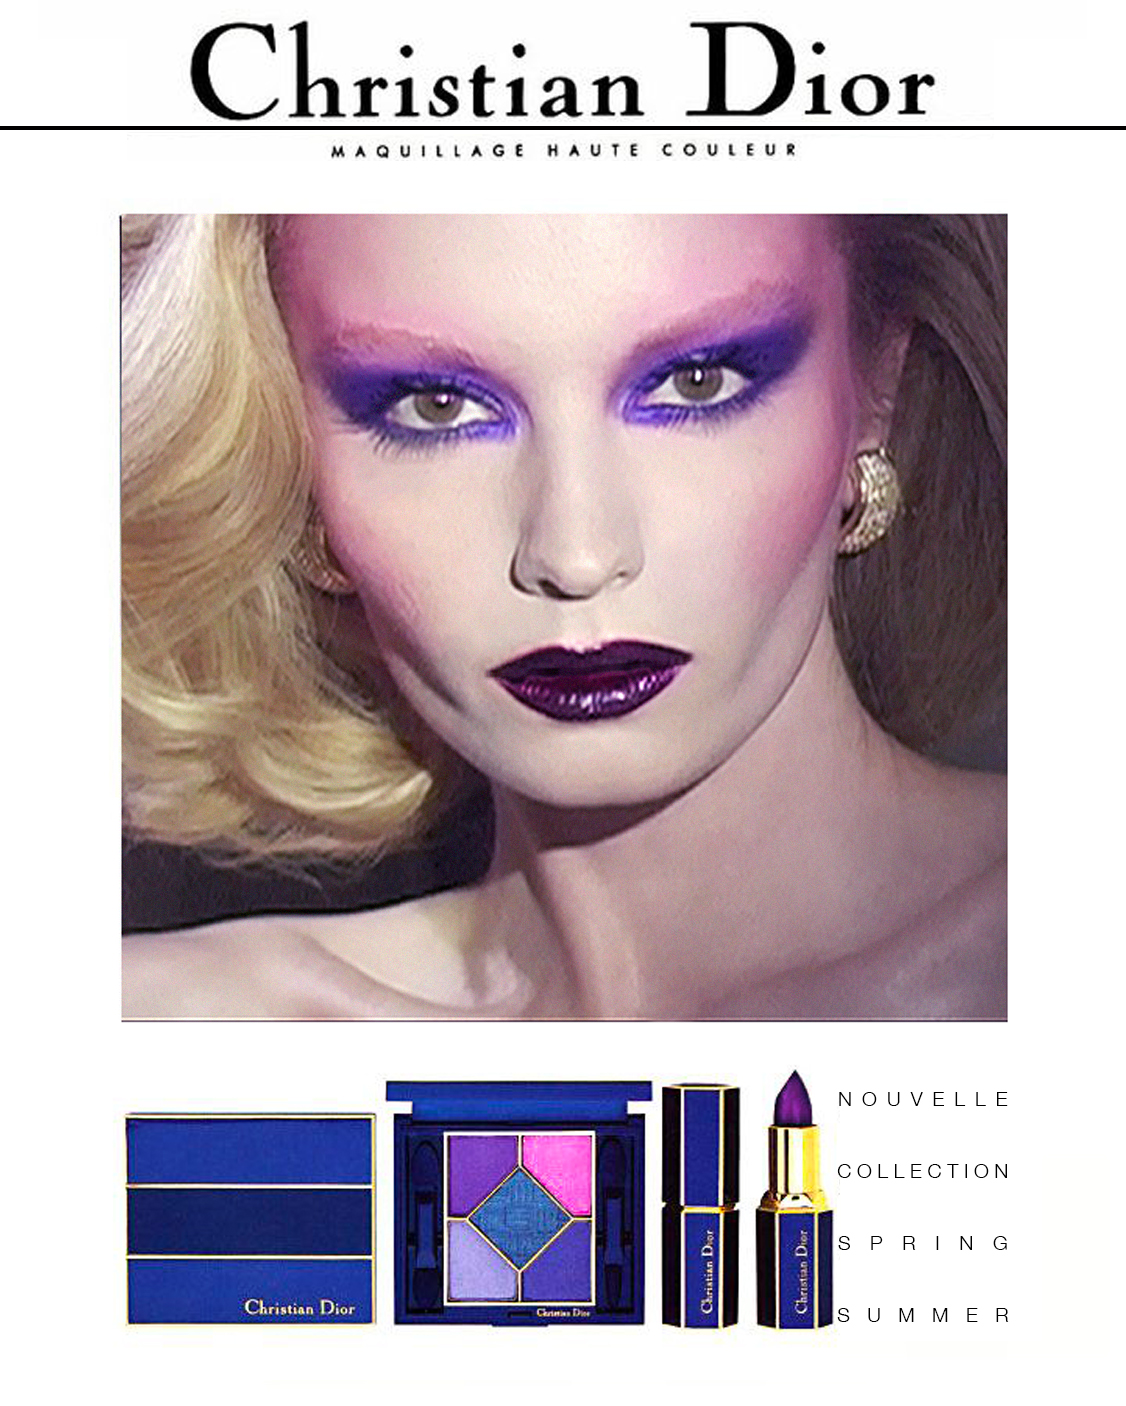 Dior Beauty Exclusive With Sam Visser and Zizi Donohoe - V Magazine